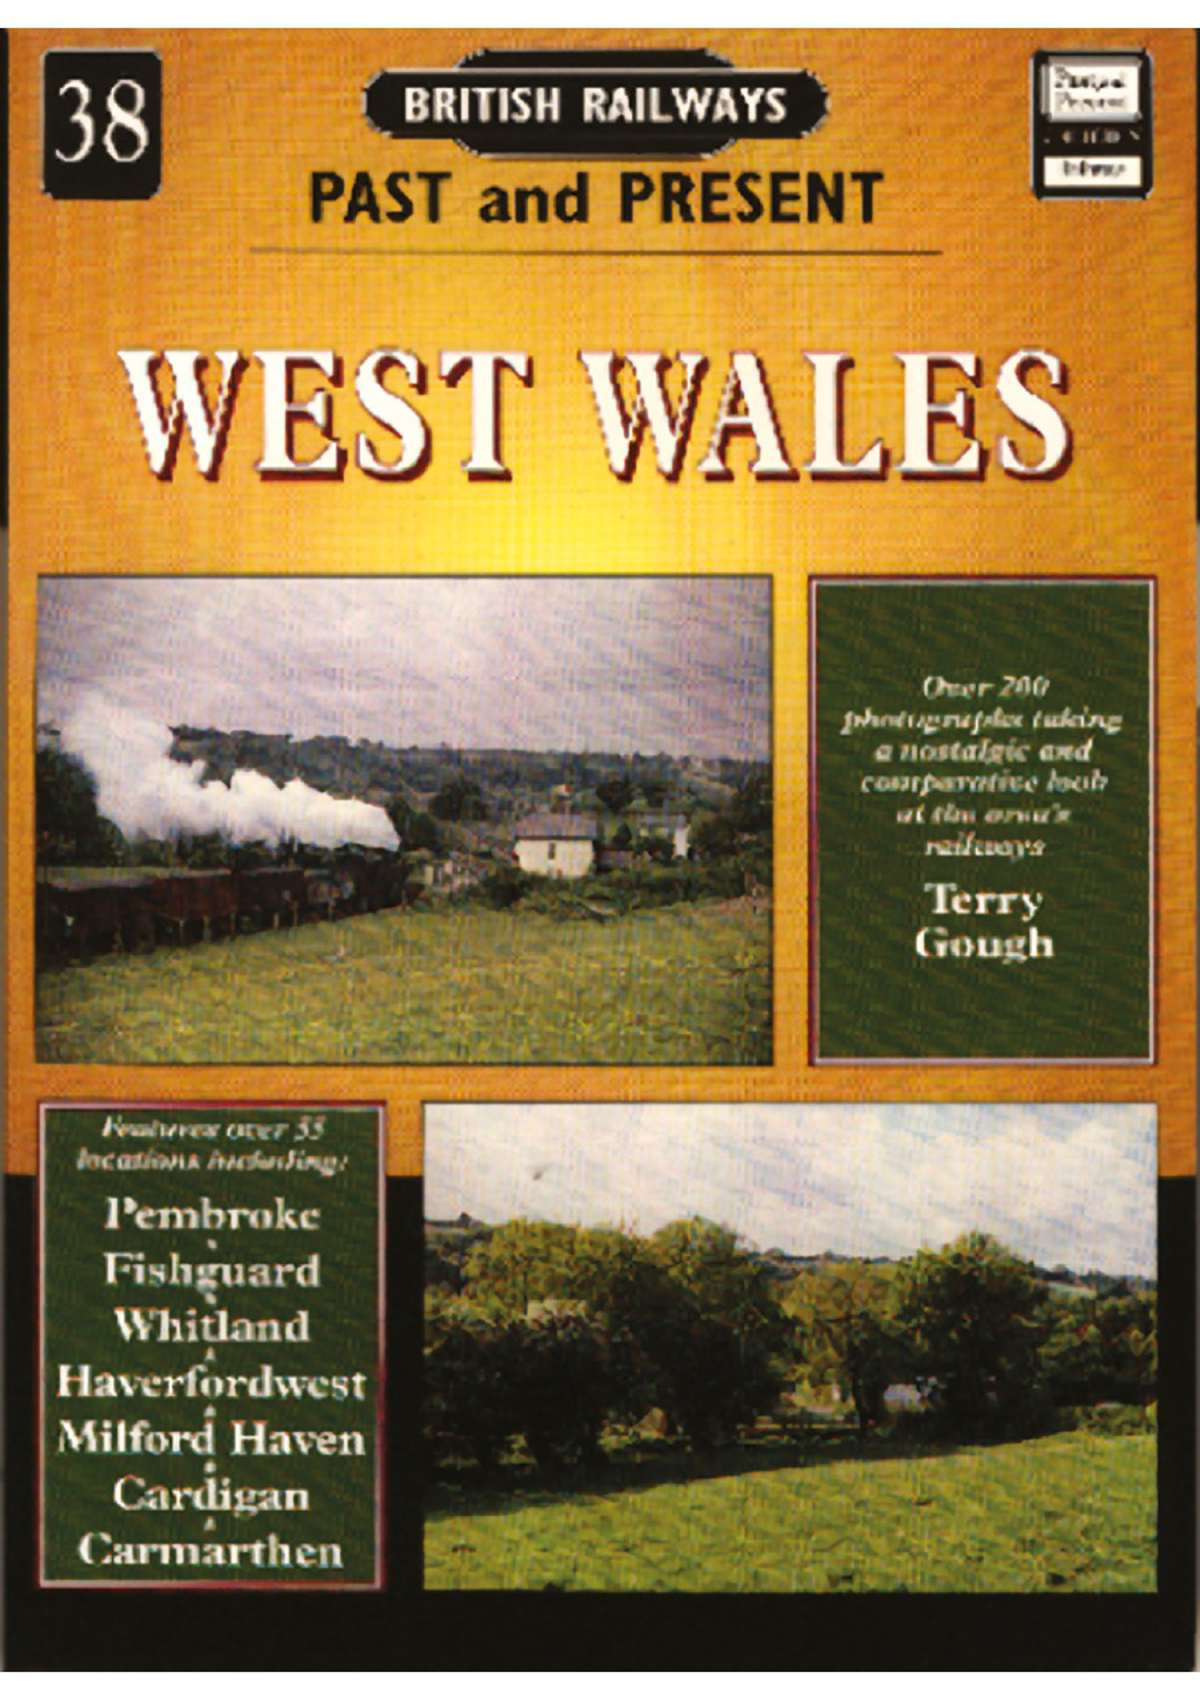 1751 - No 38: West Wales